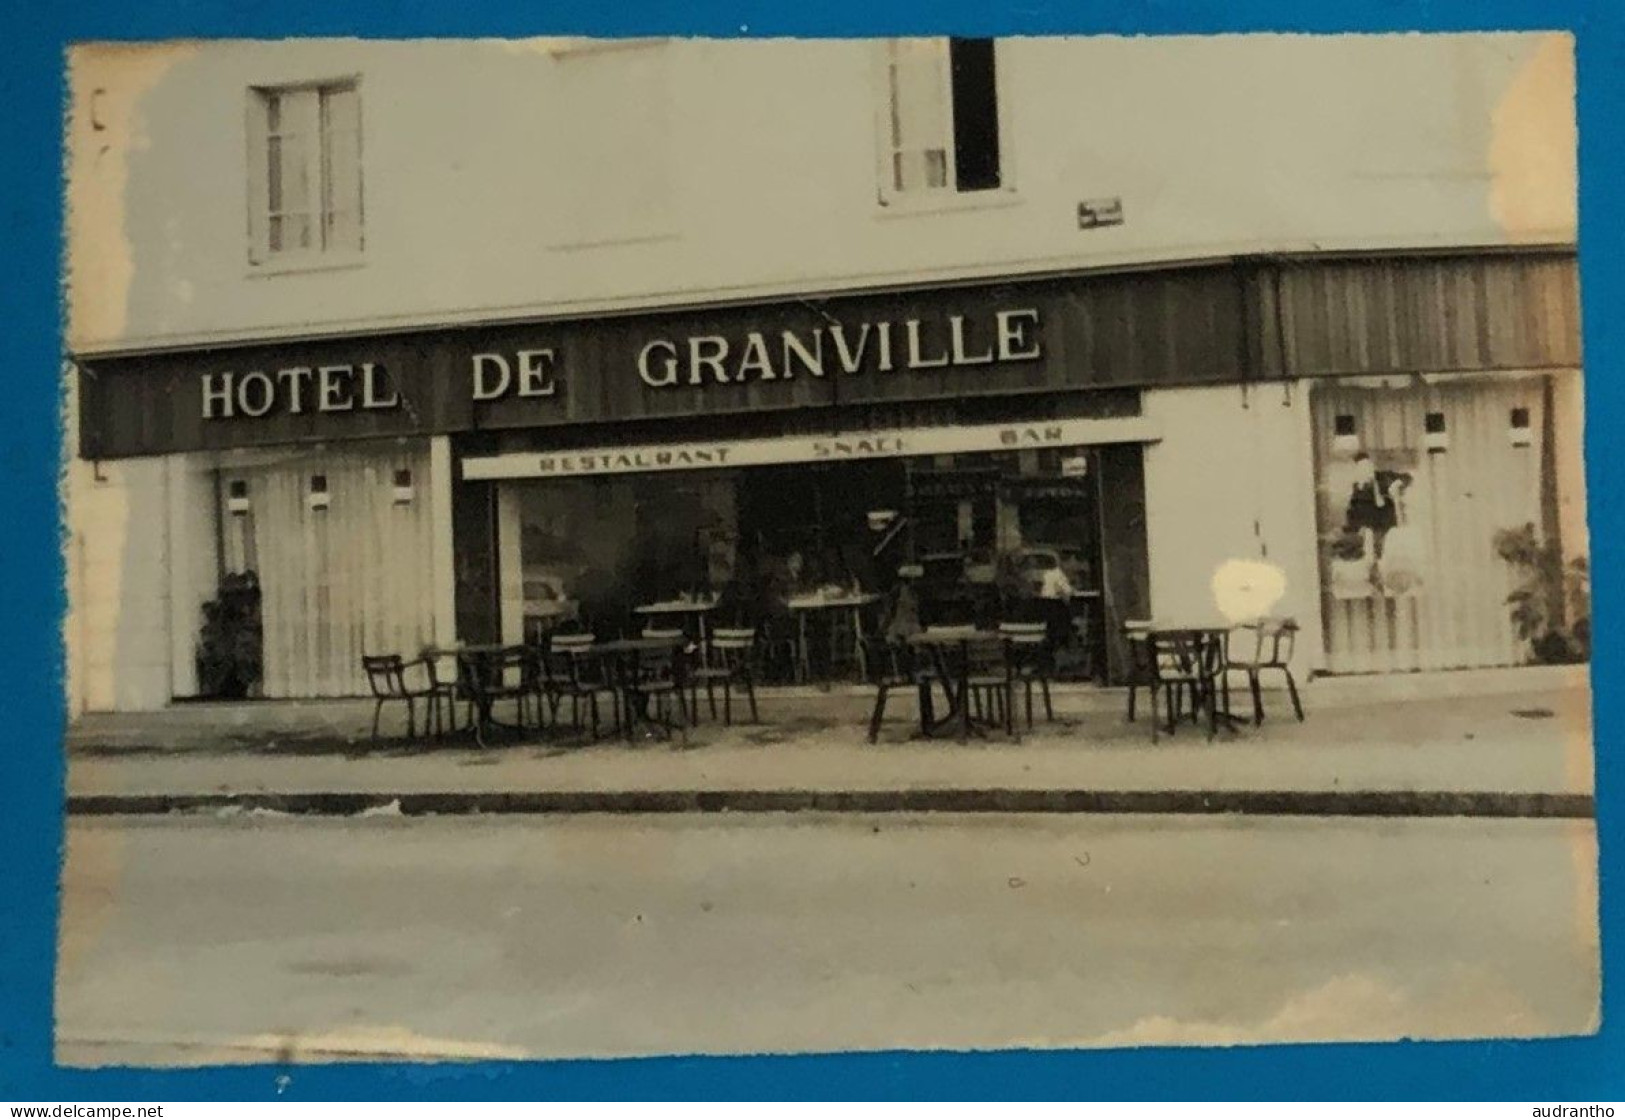 Ancien Cendrier Vide Poche En Verre HOTEL DE GRANVILLE Restaurant Snack Bar - Asbakken